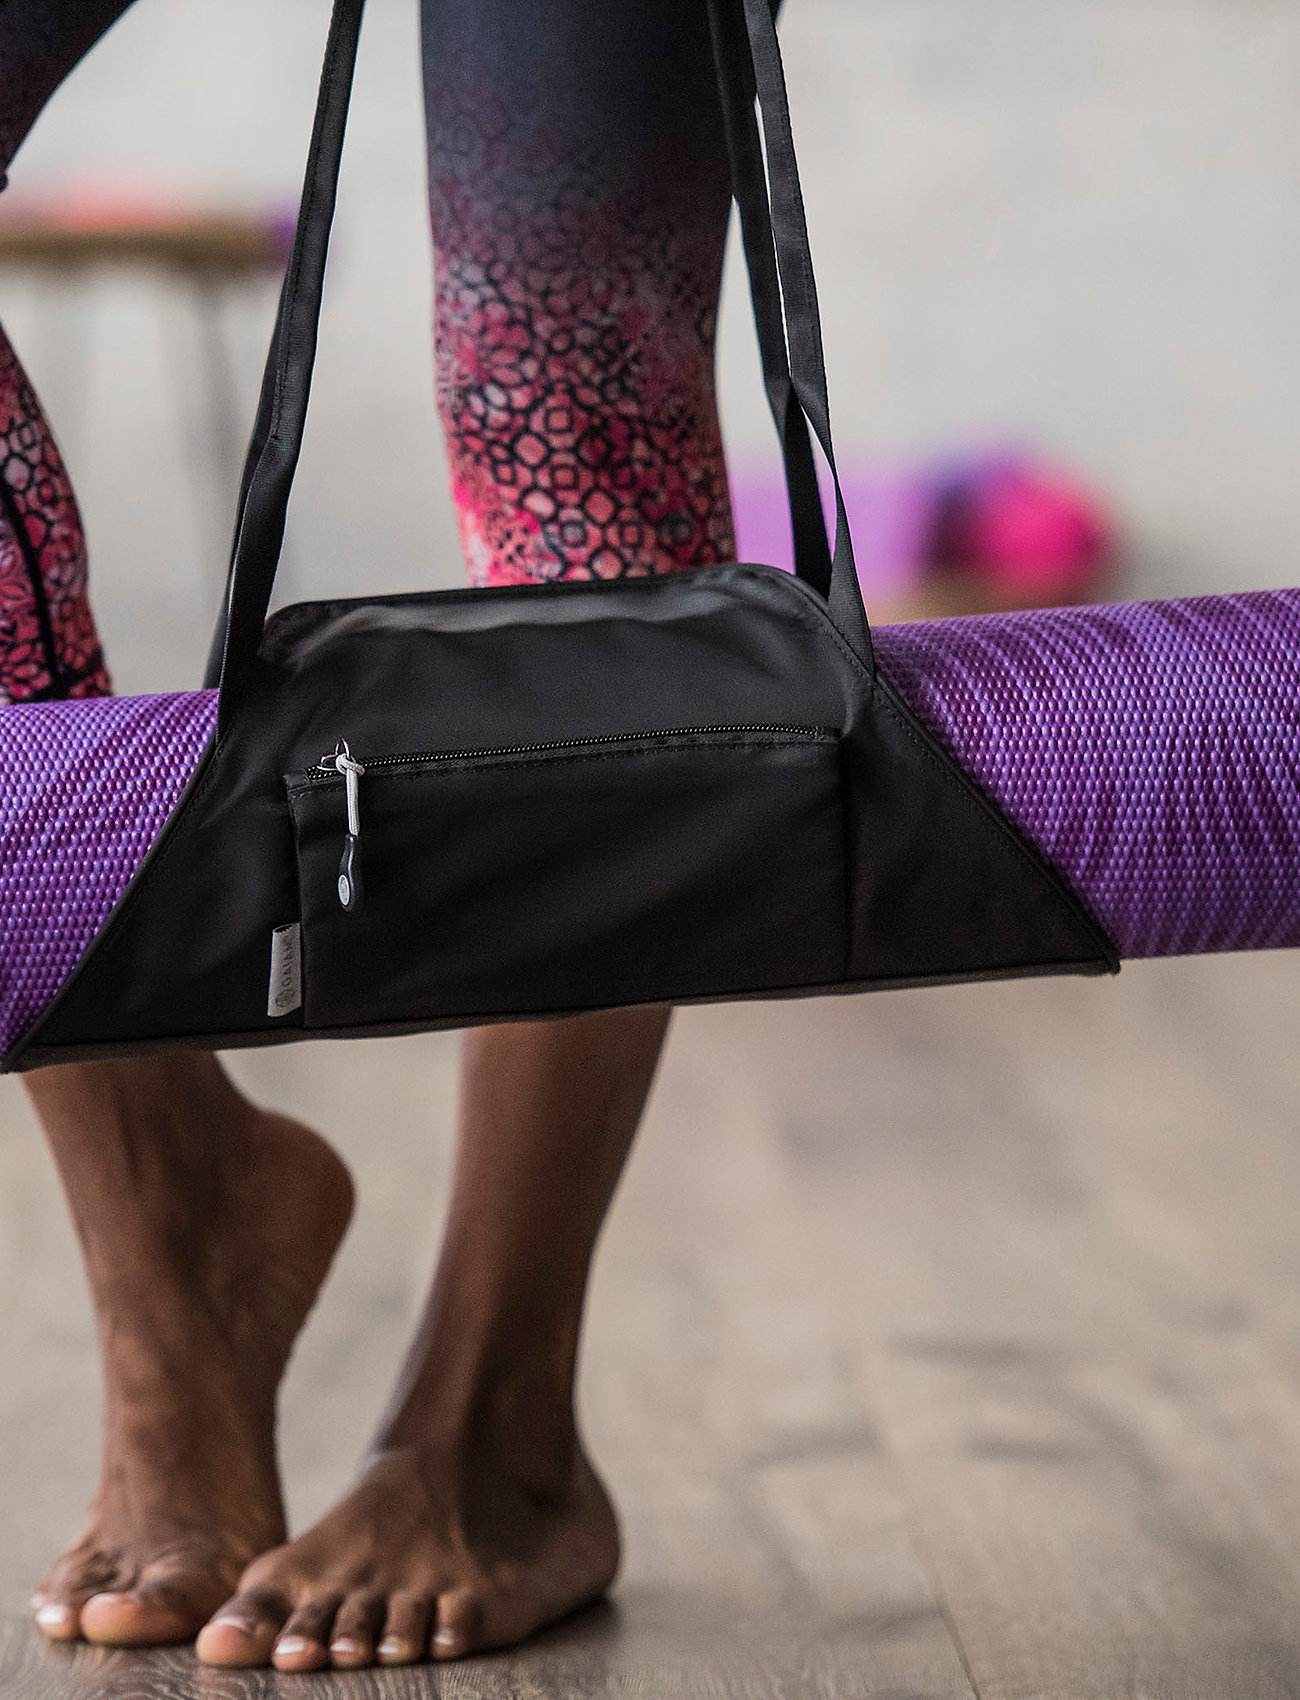 Gaiam Gaiam On-the-go Yoga Mat Carrier Citron/storm - Sports